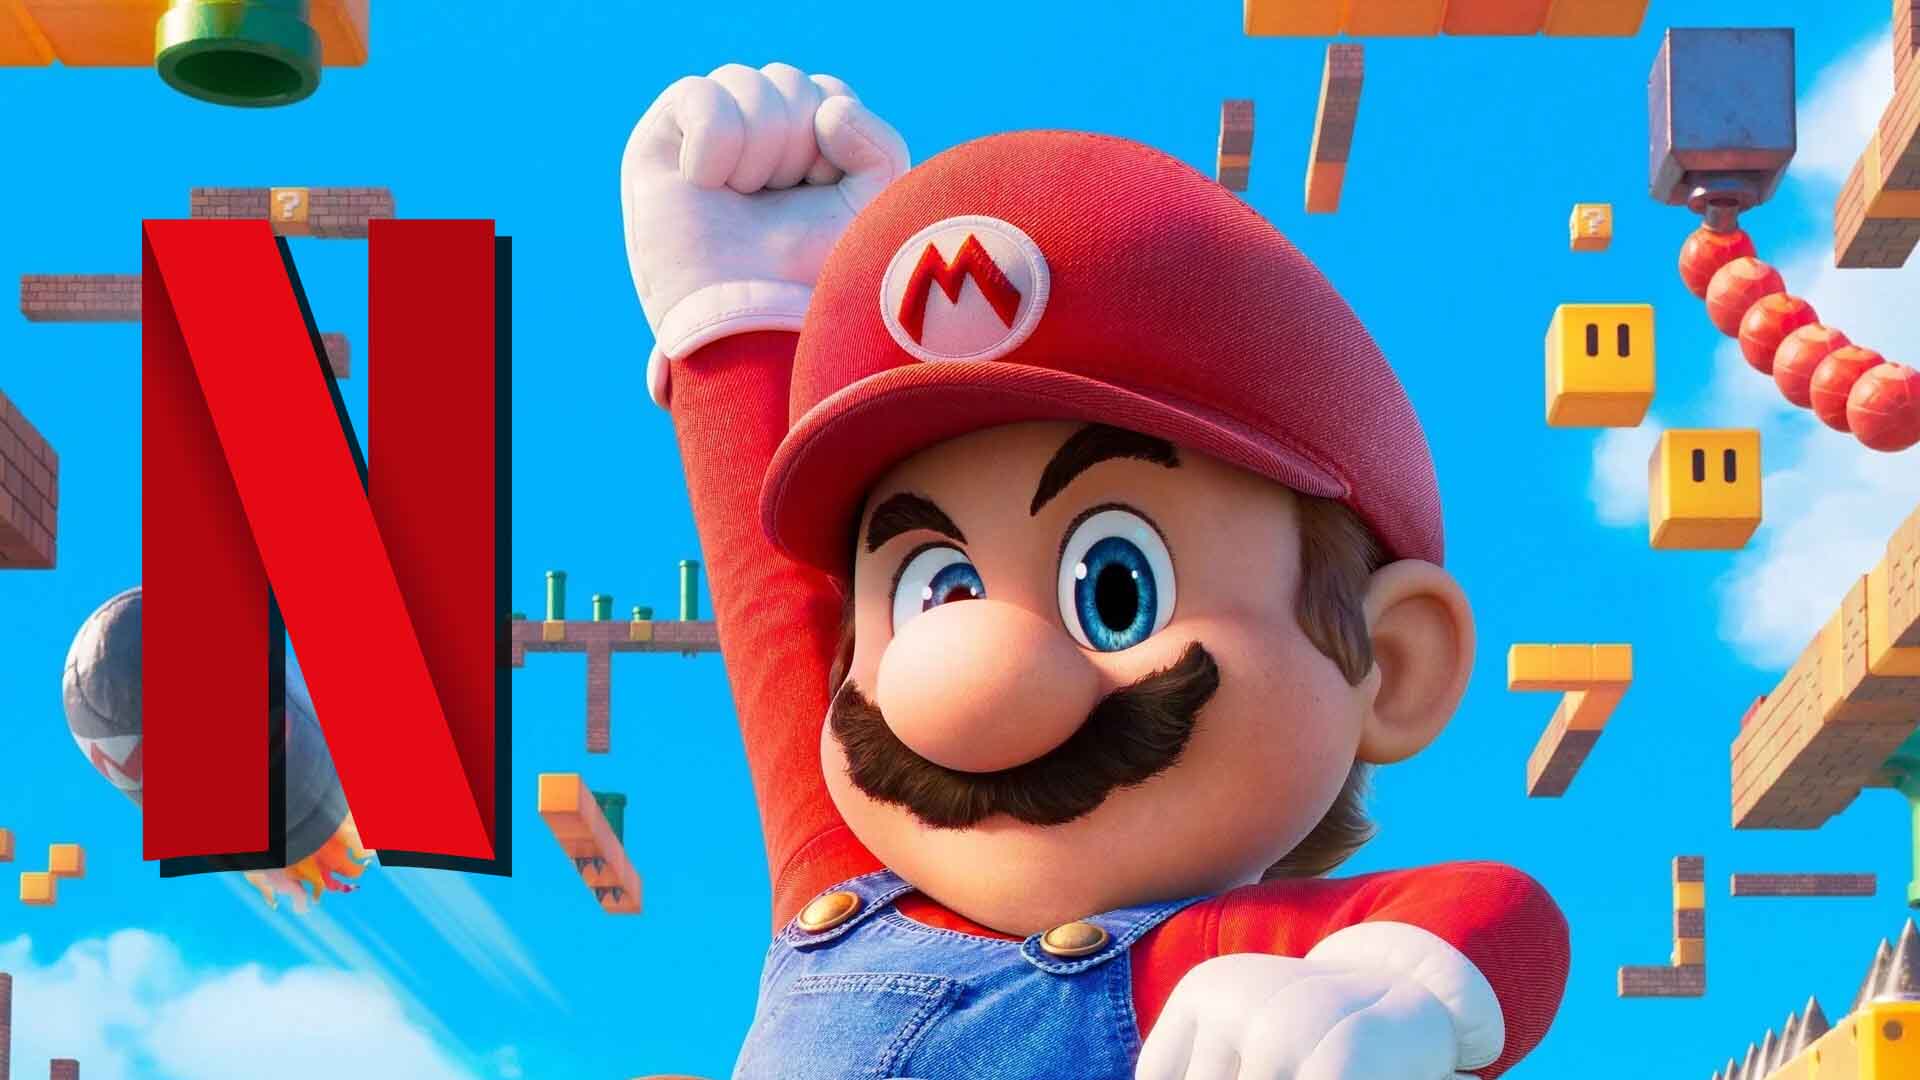 Watch The Super Mario Bros. Movie on Netflix Today!